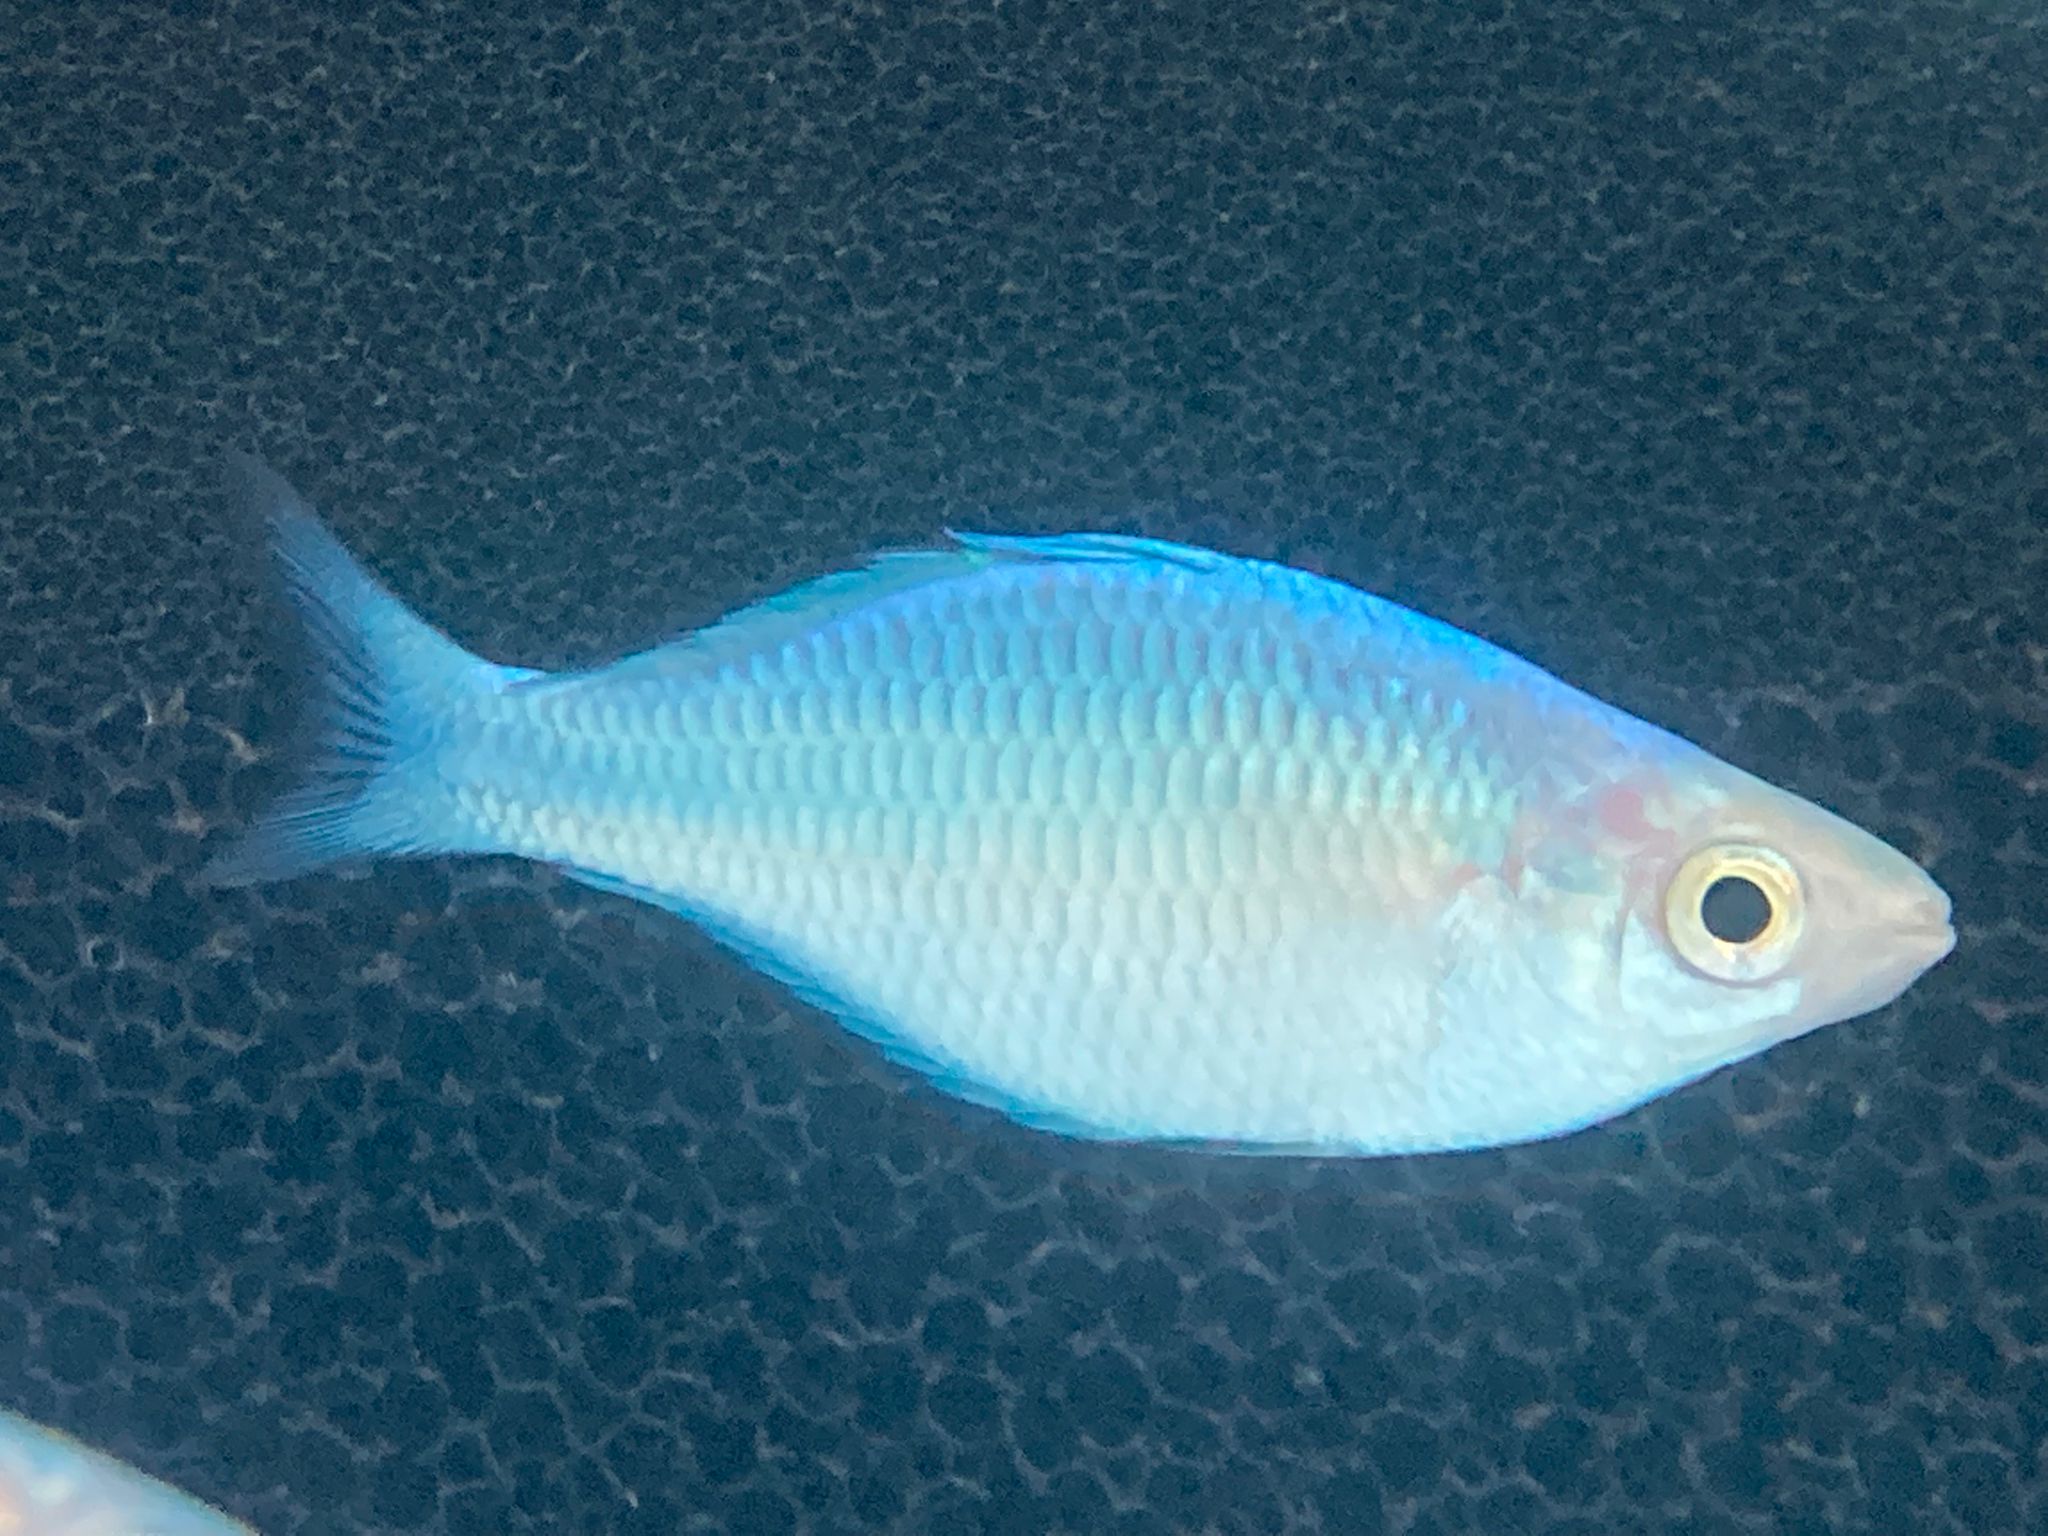 Blue rainbow fish